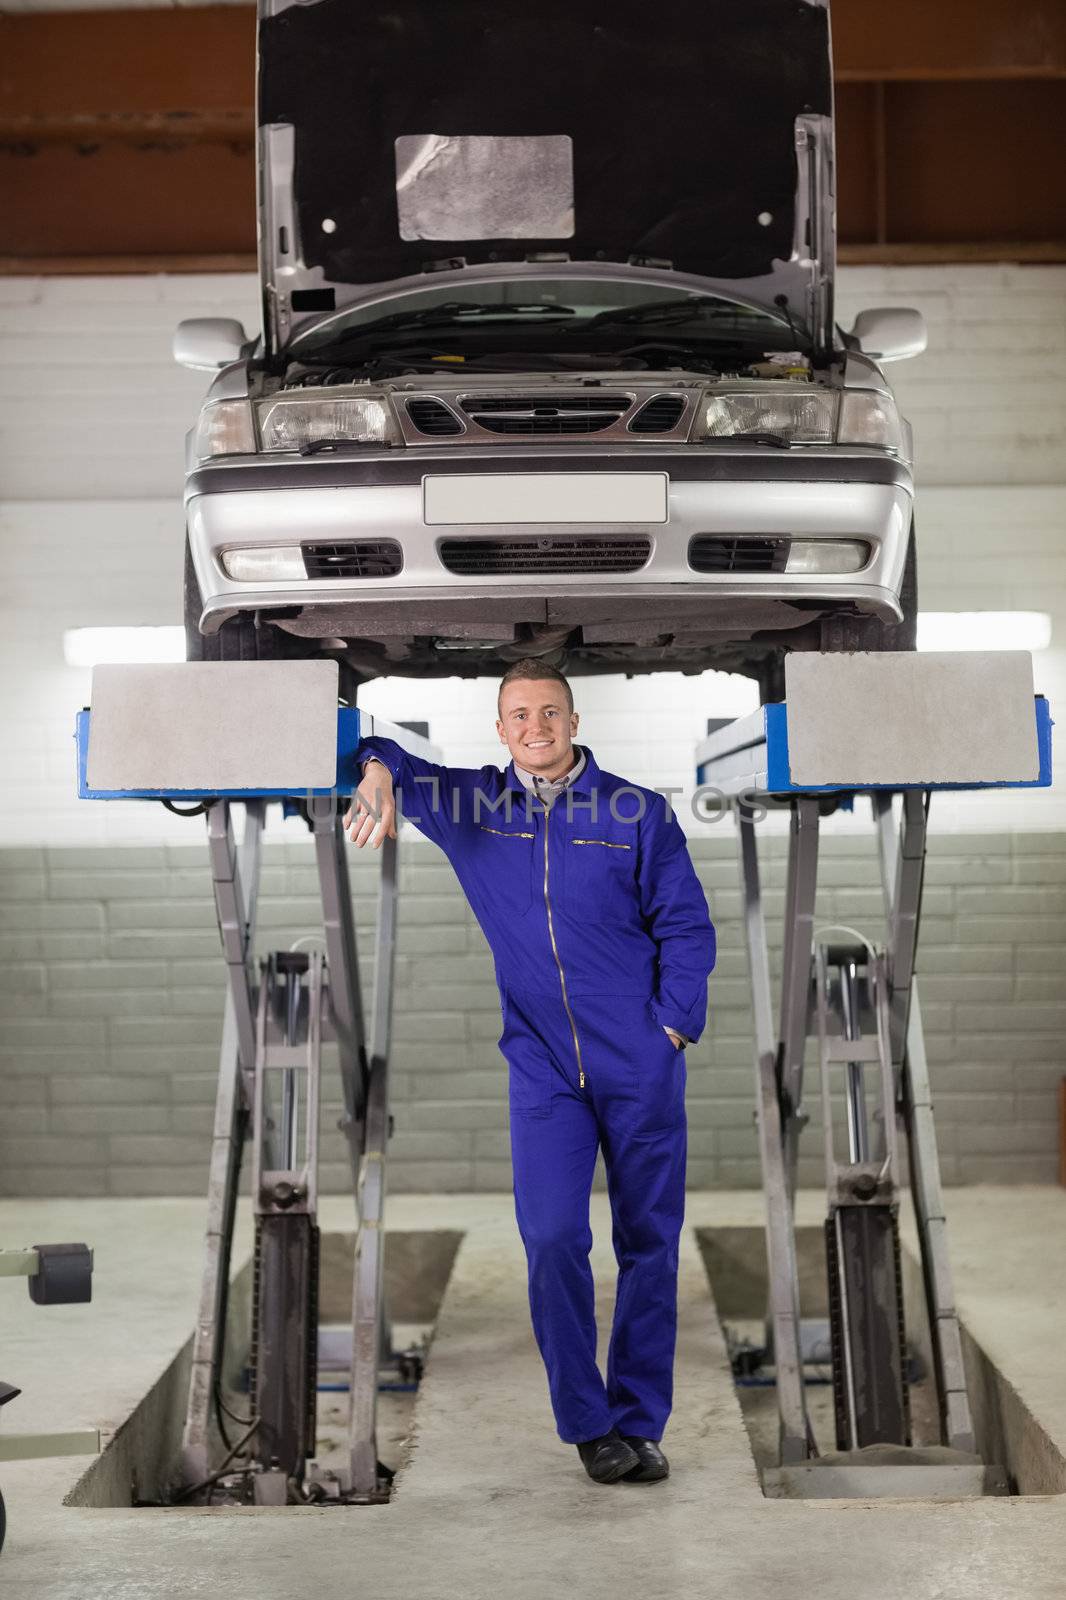 Smiling mechanic standing below a car in a garage